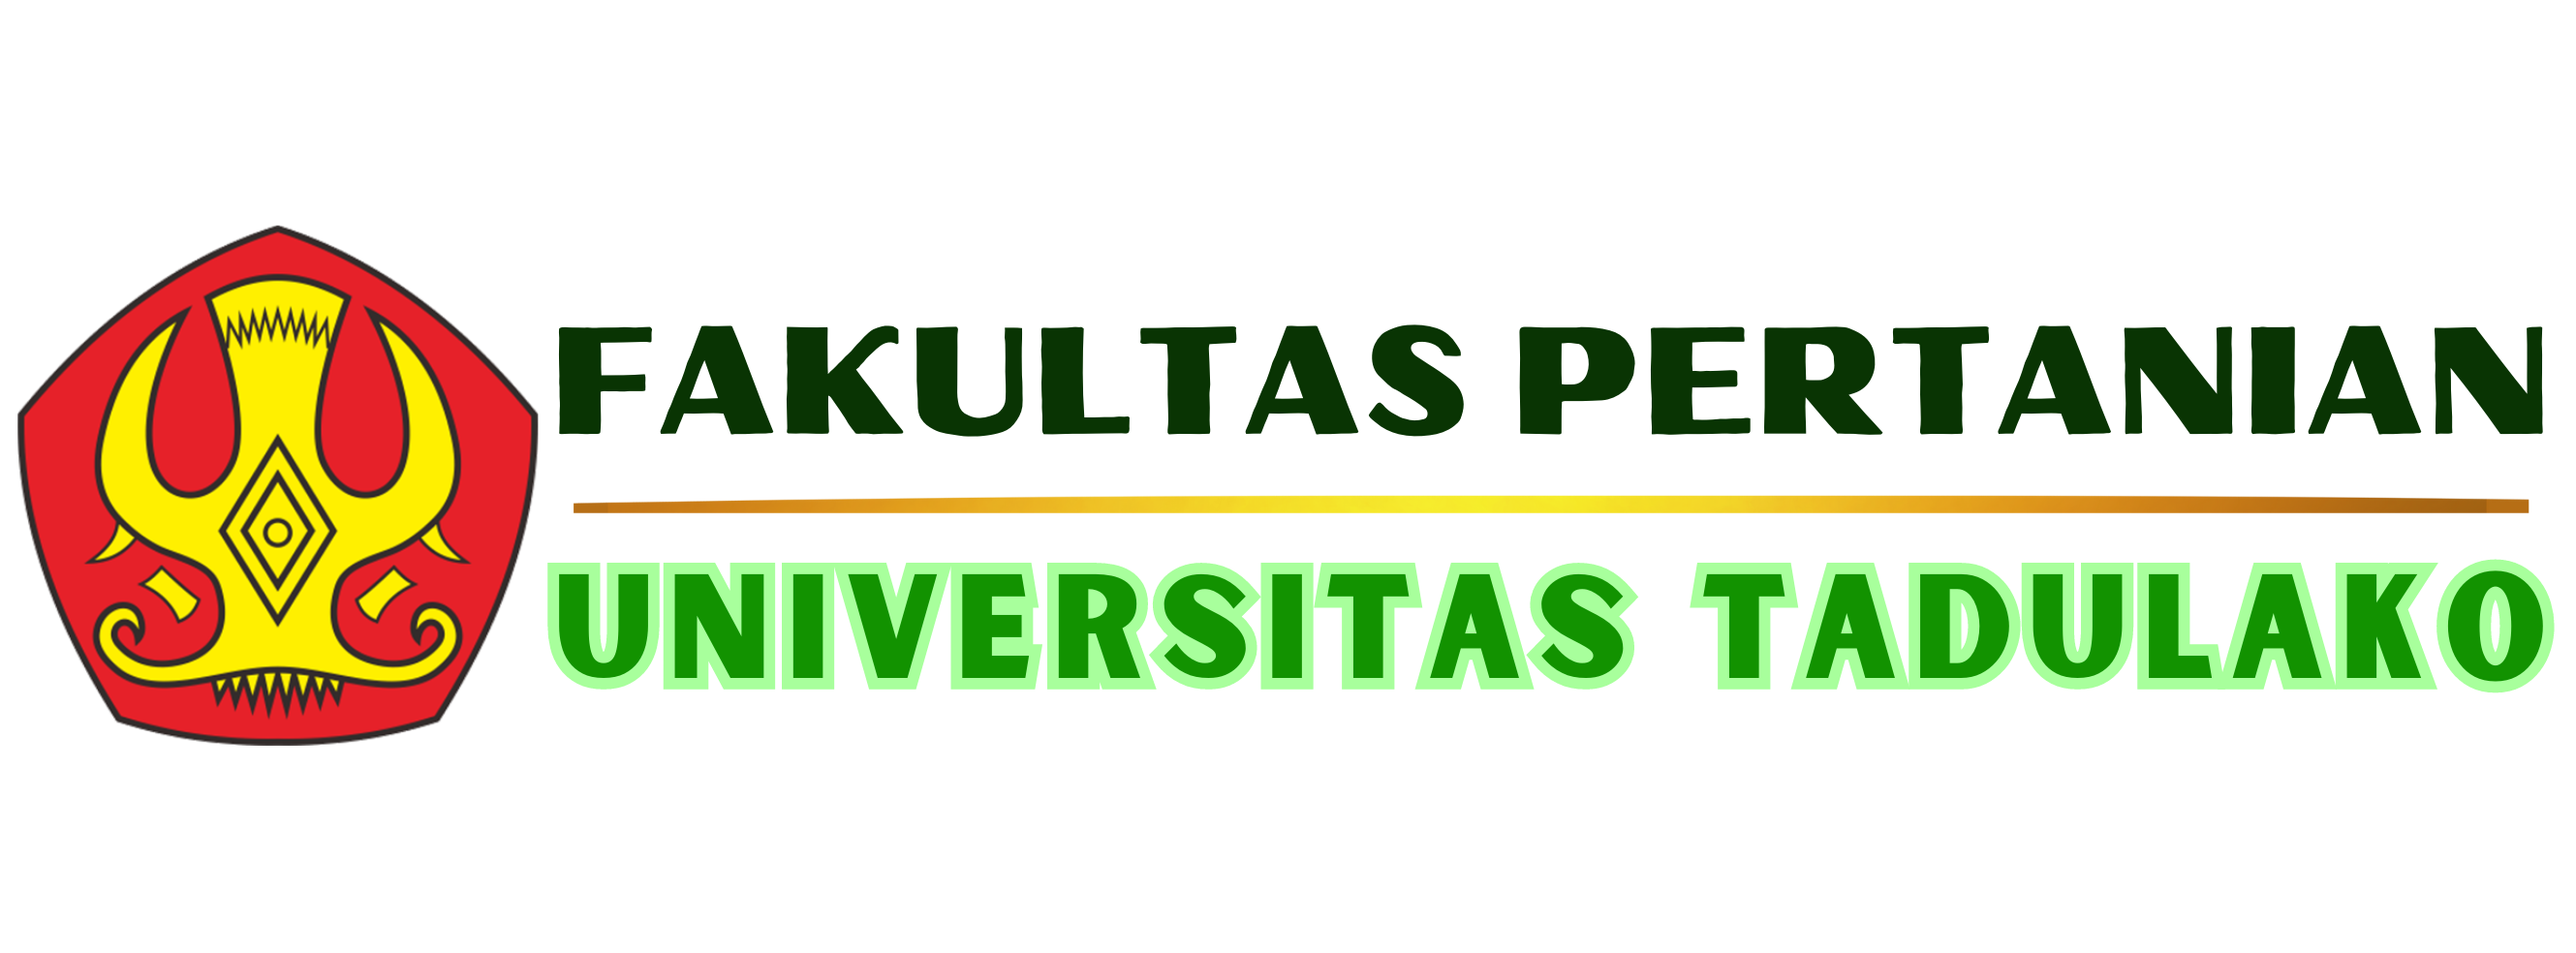 Fakultas Pertanian Universitas Tadulako